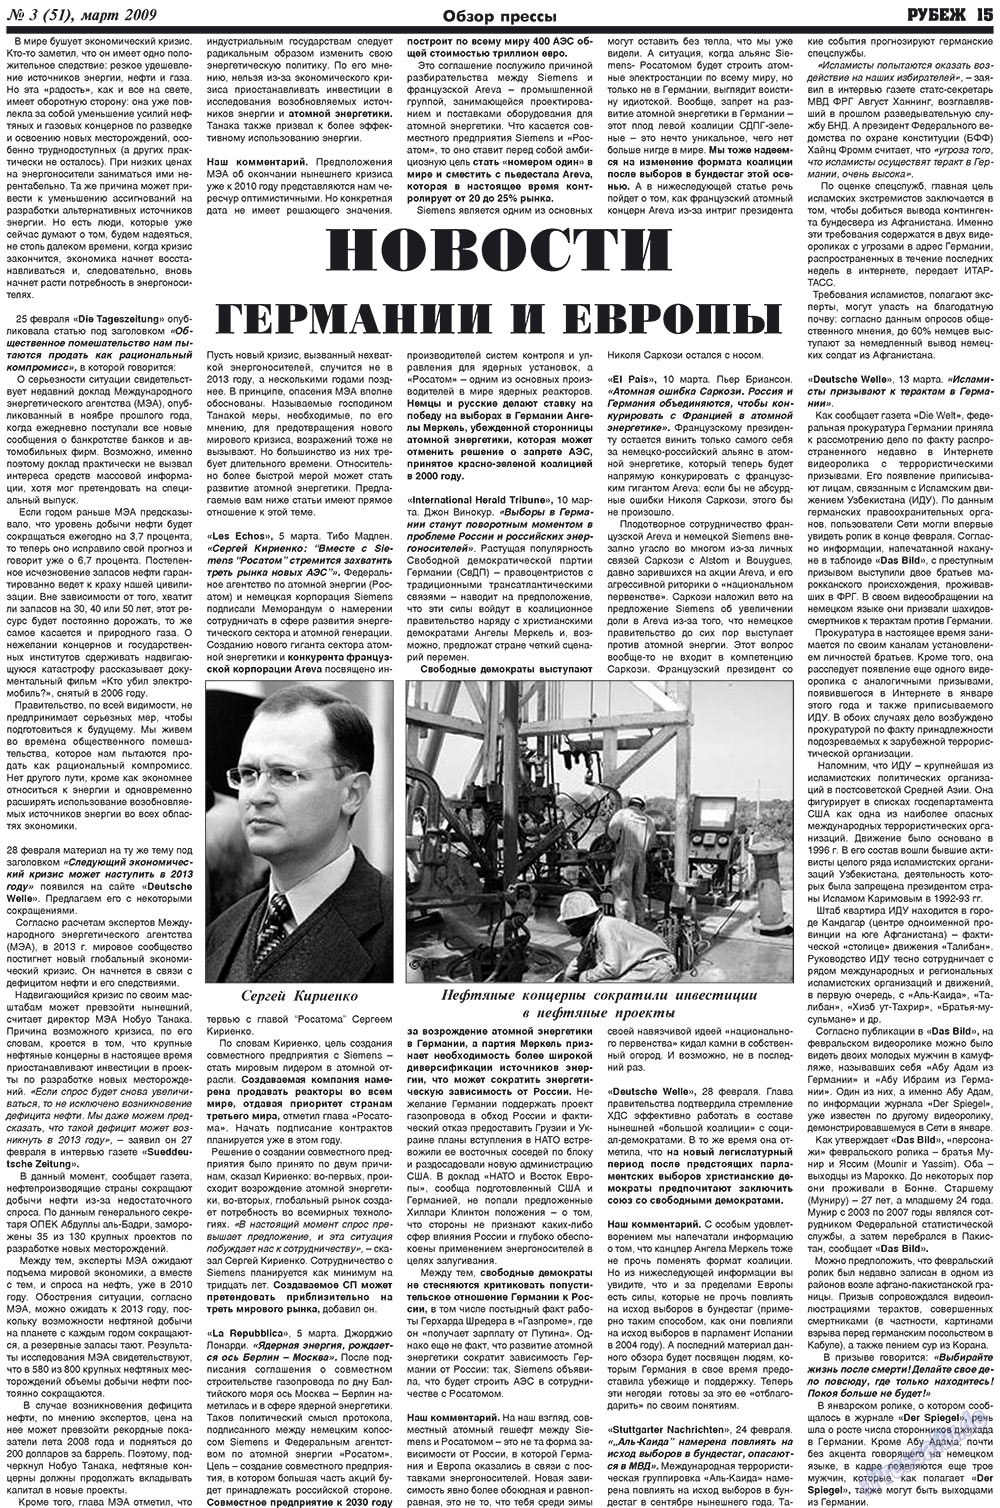 Рубеж, газета. 2009 №3 стр.15